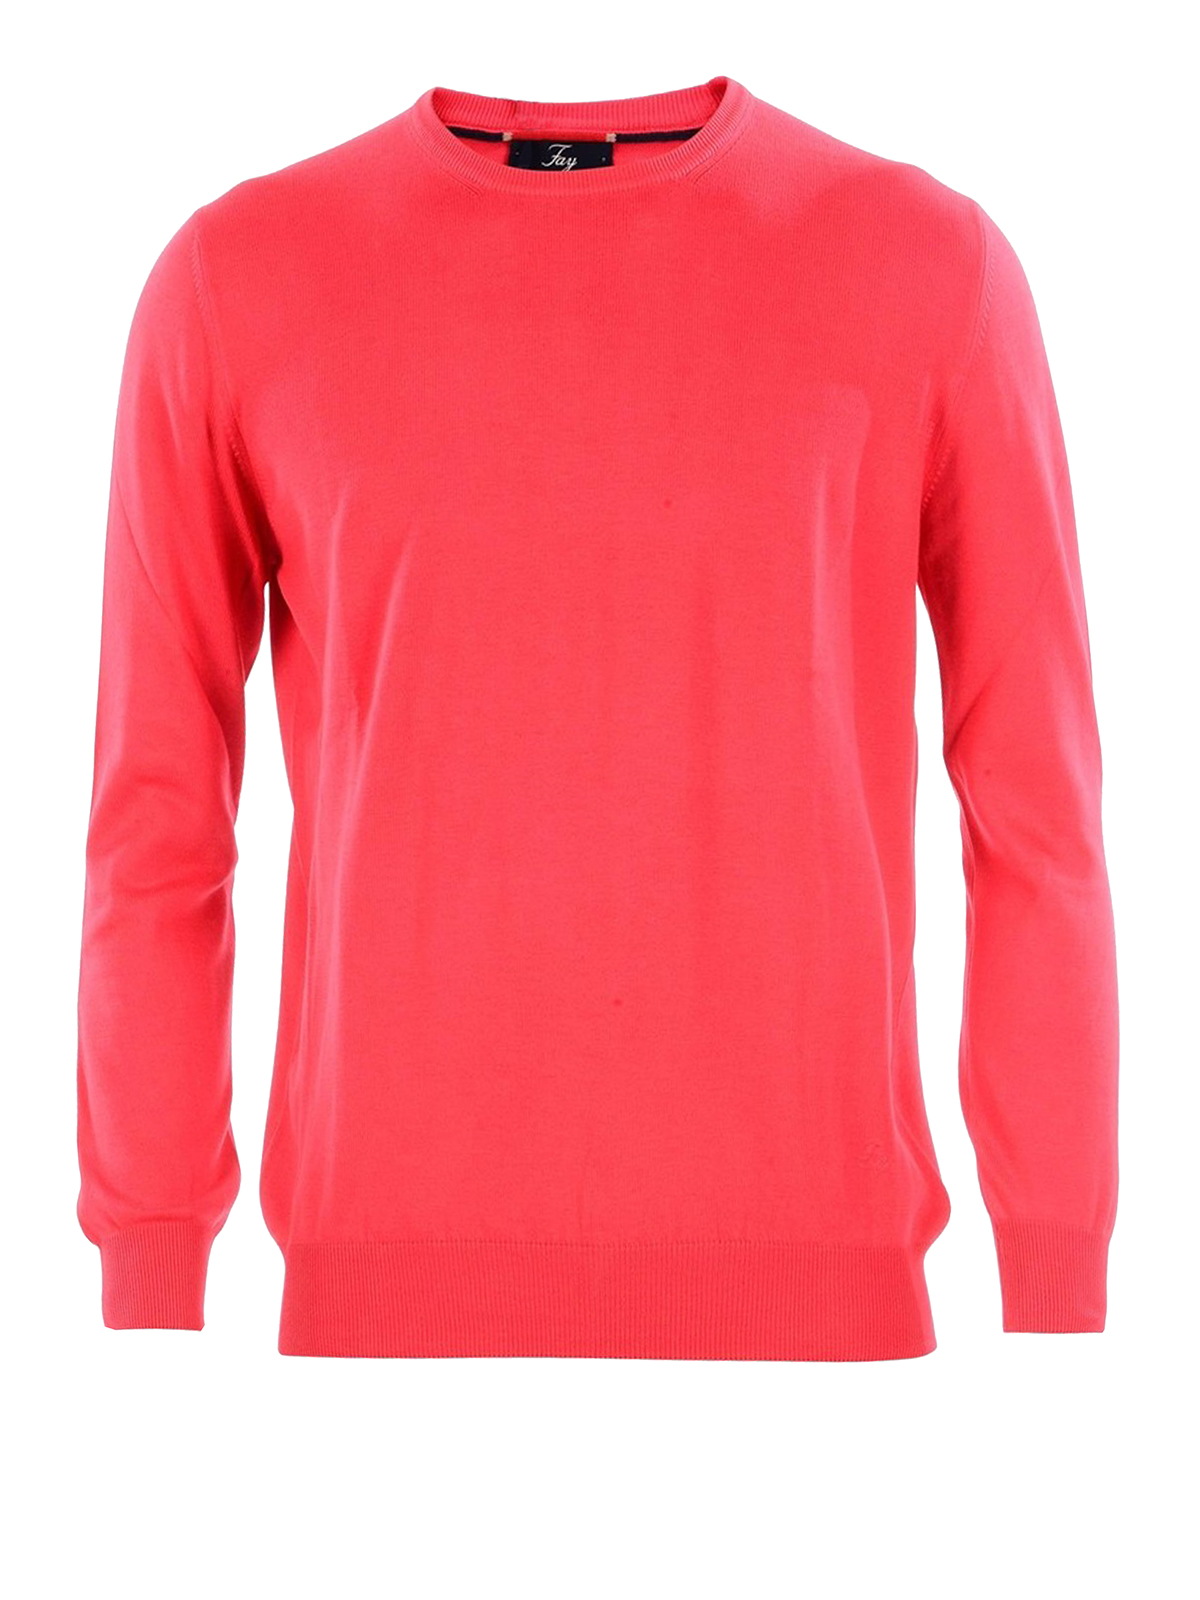 Download Fay - Light red cotton crew neck sweater - crew necks - NMMC136241TBLRR004